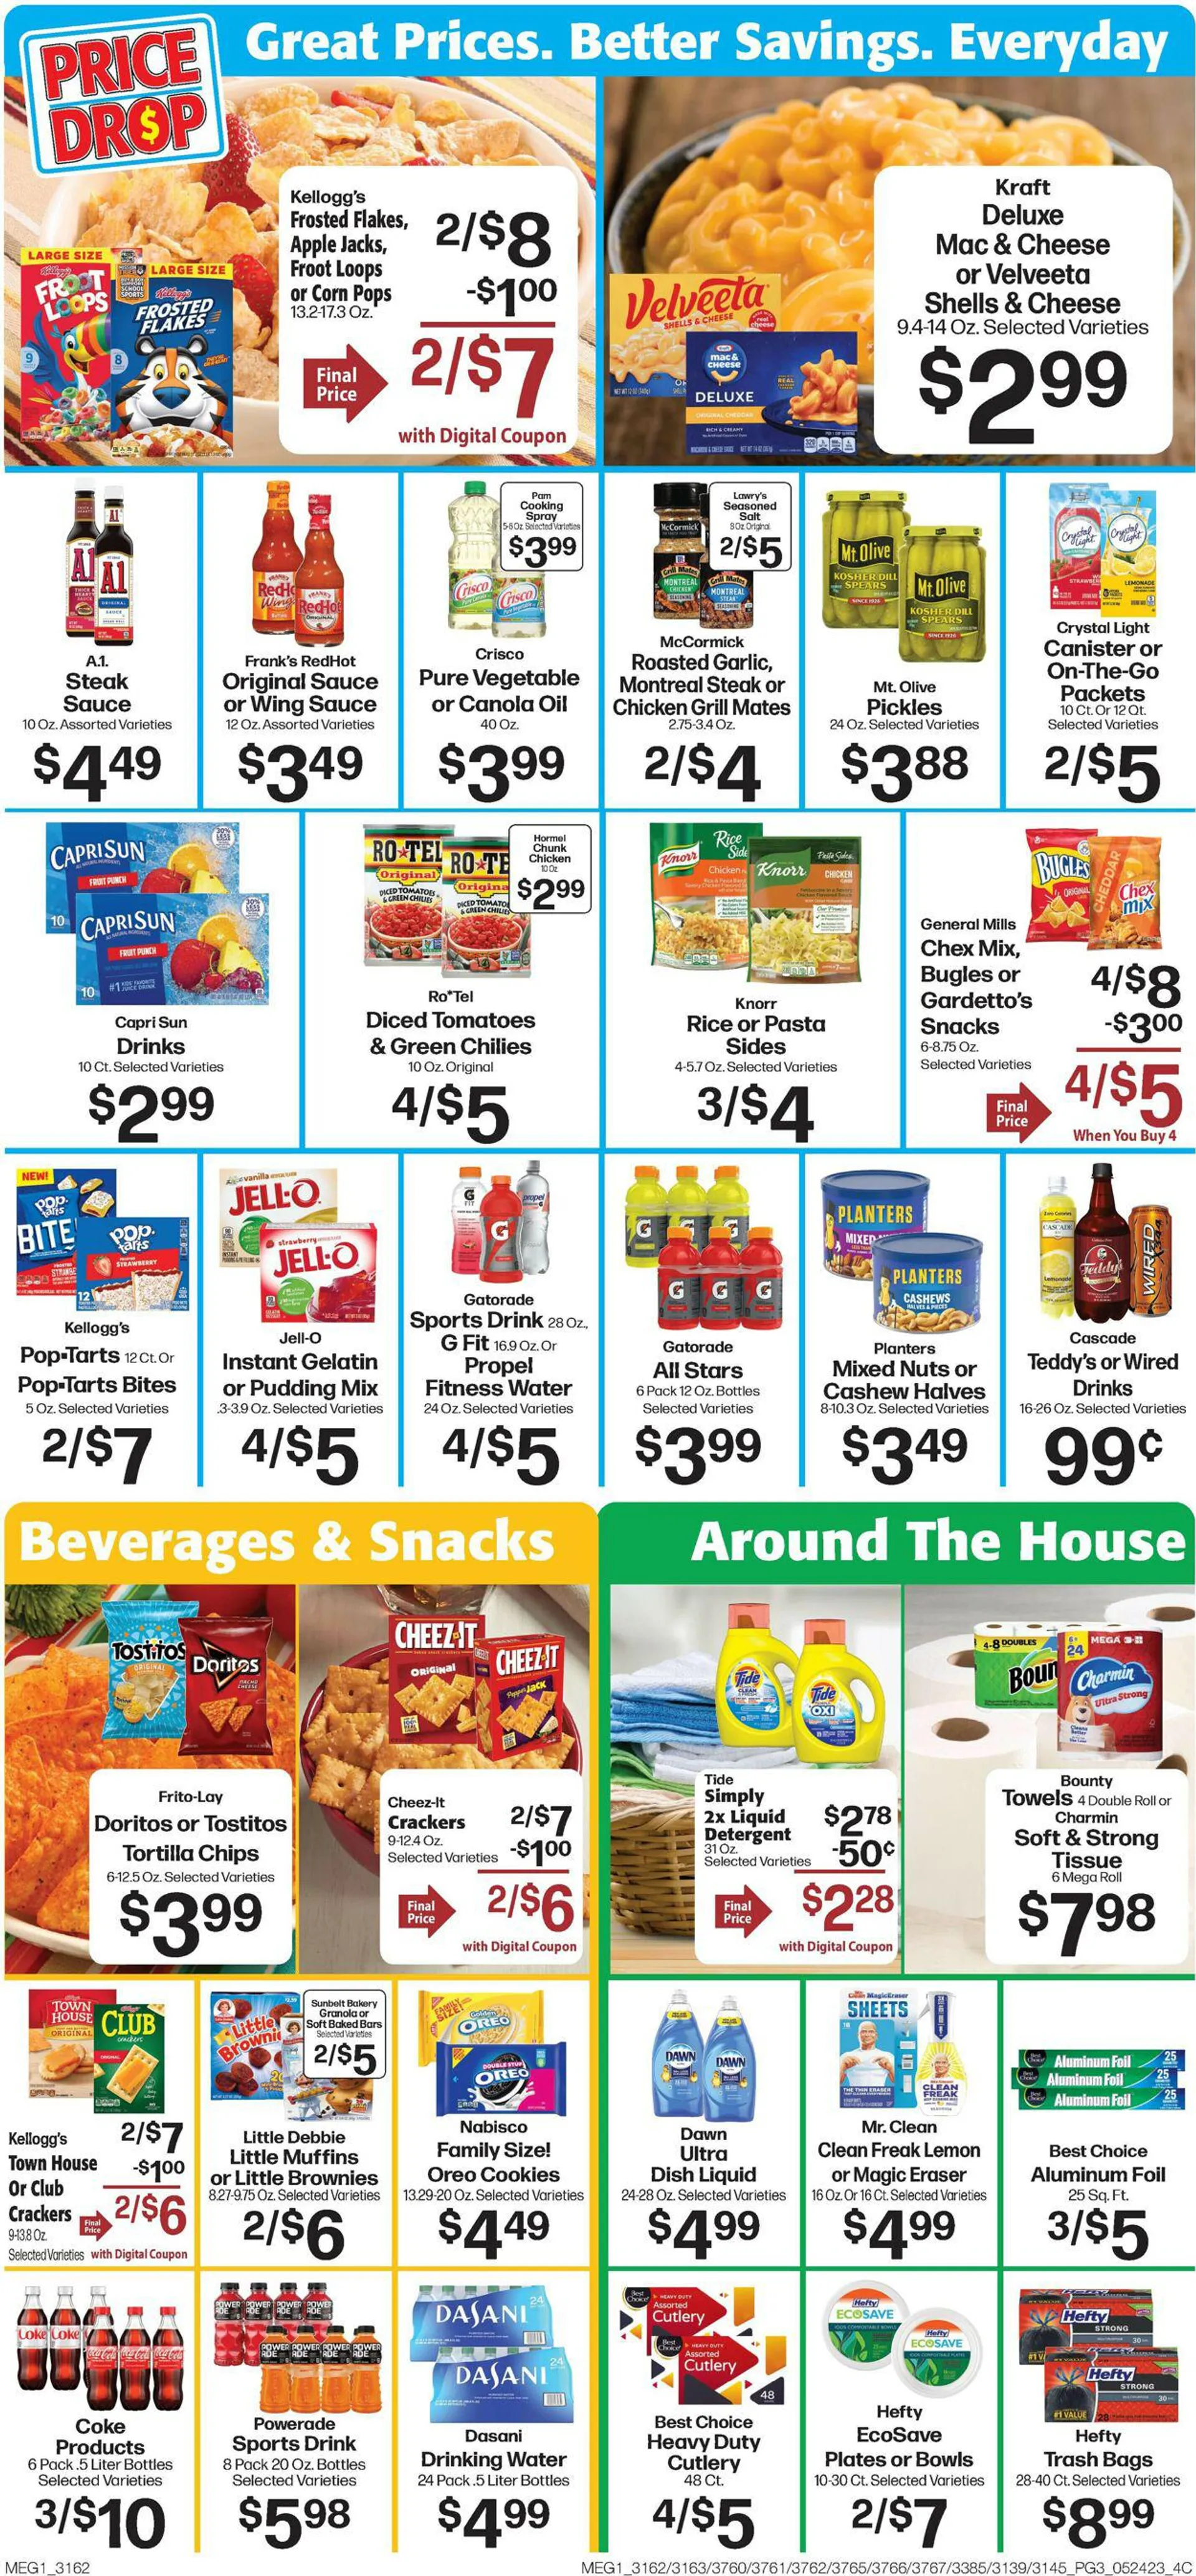 Hays Supermarket Current weekly ad - 5